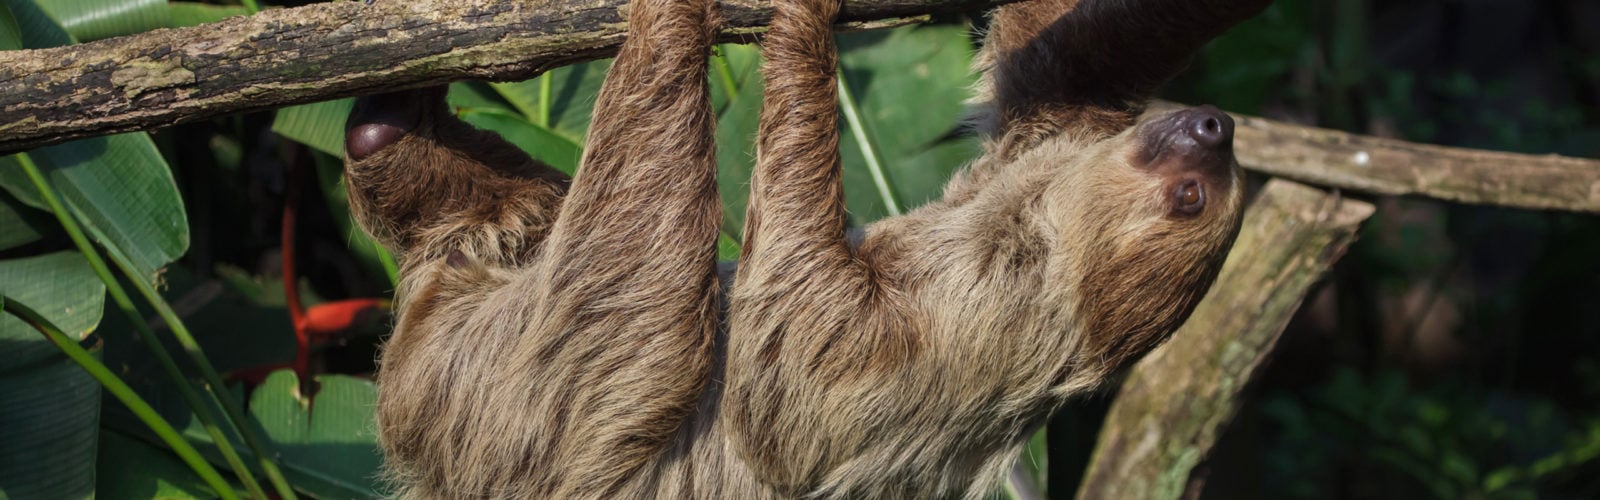 colombia-amazon-sloth